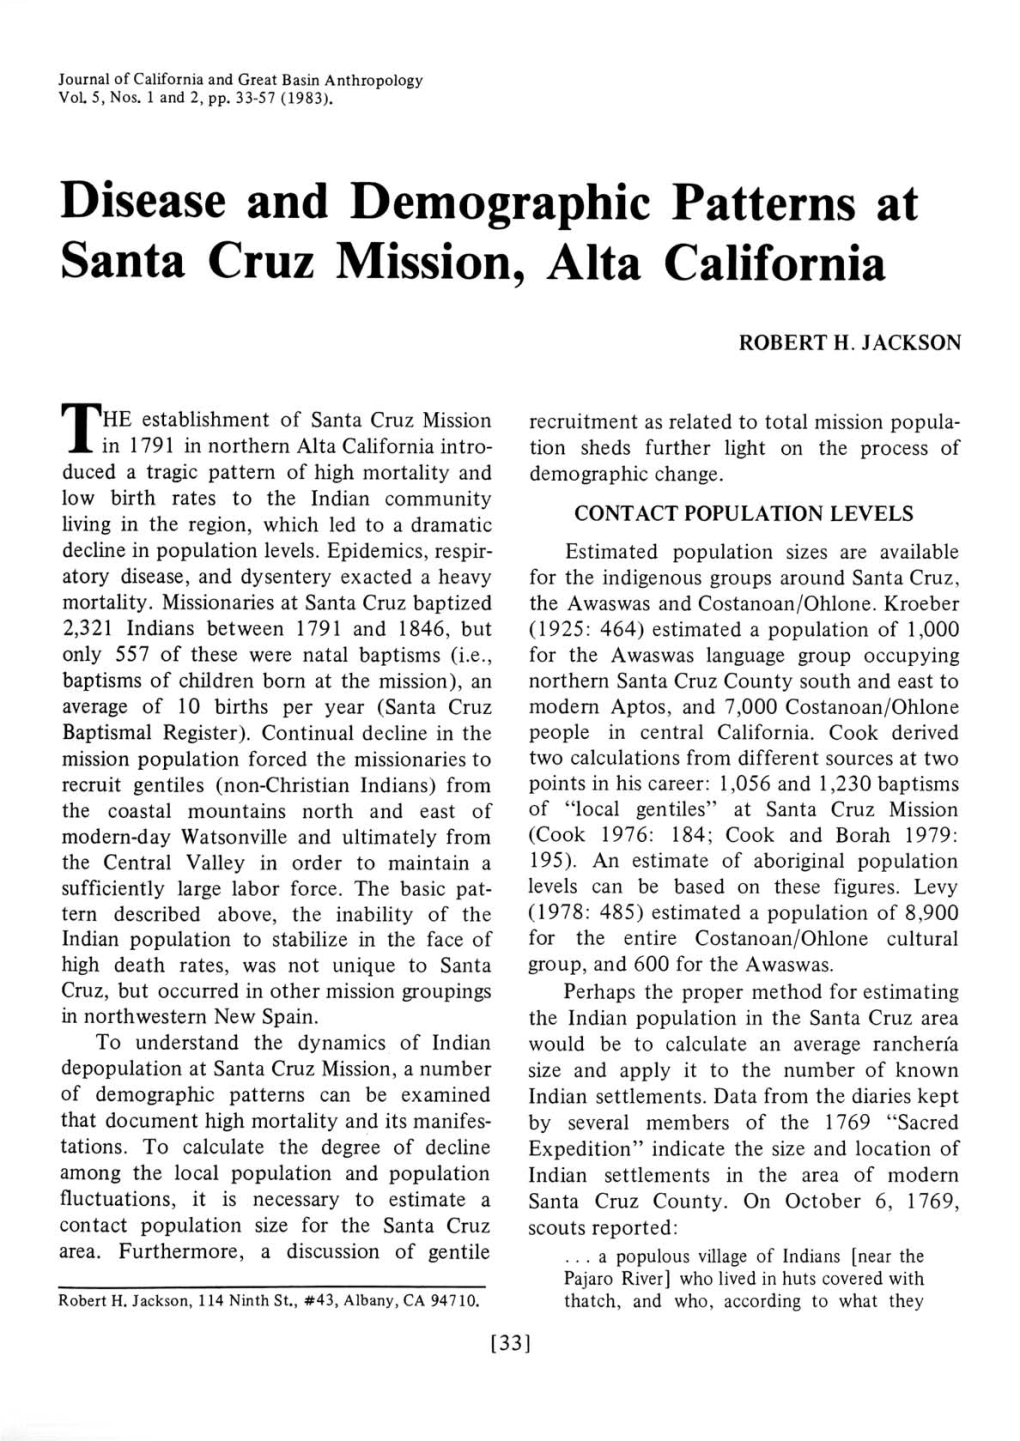 Disease and Demographic Patterns at Santa Cruz Mission, Alta California